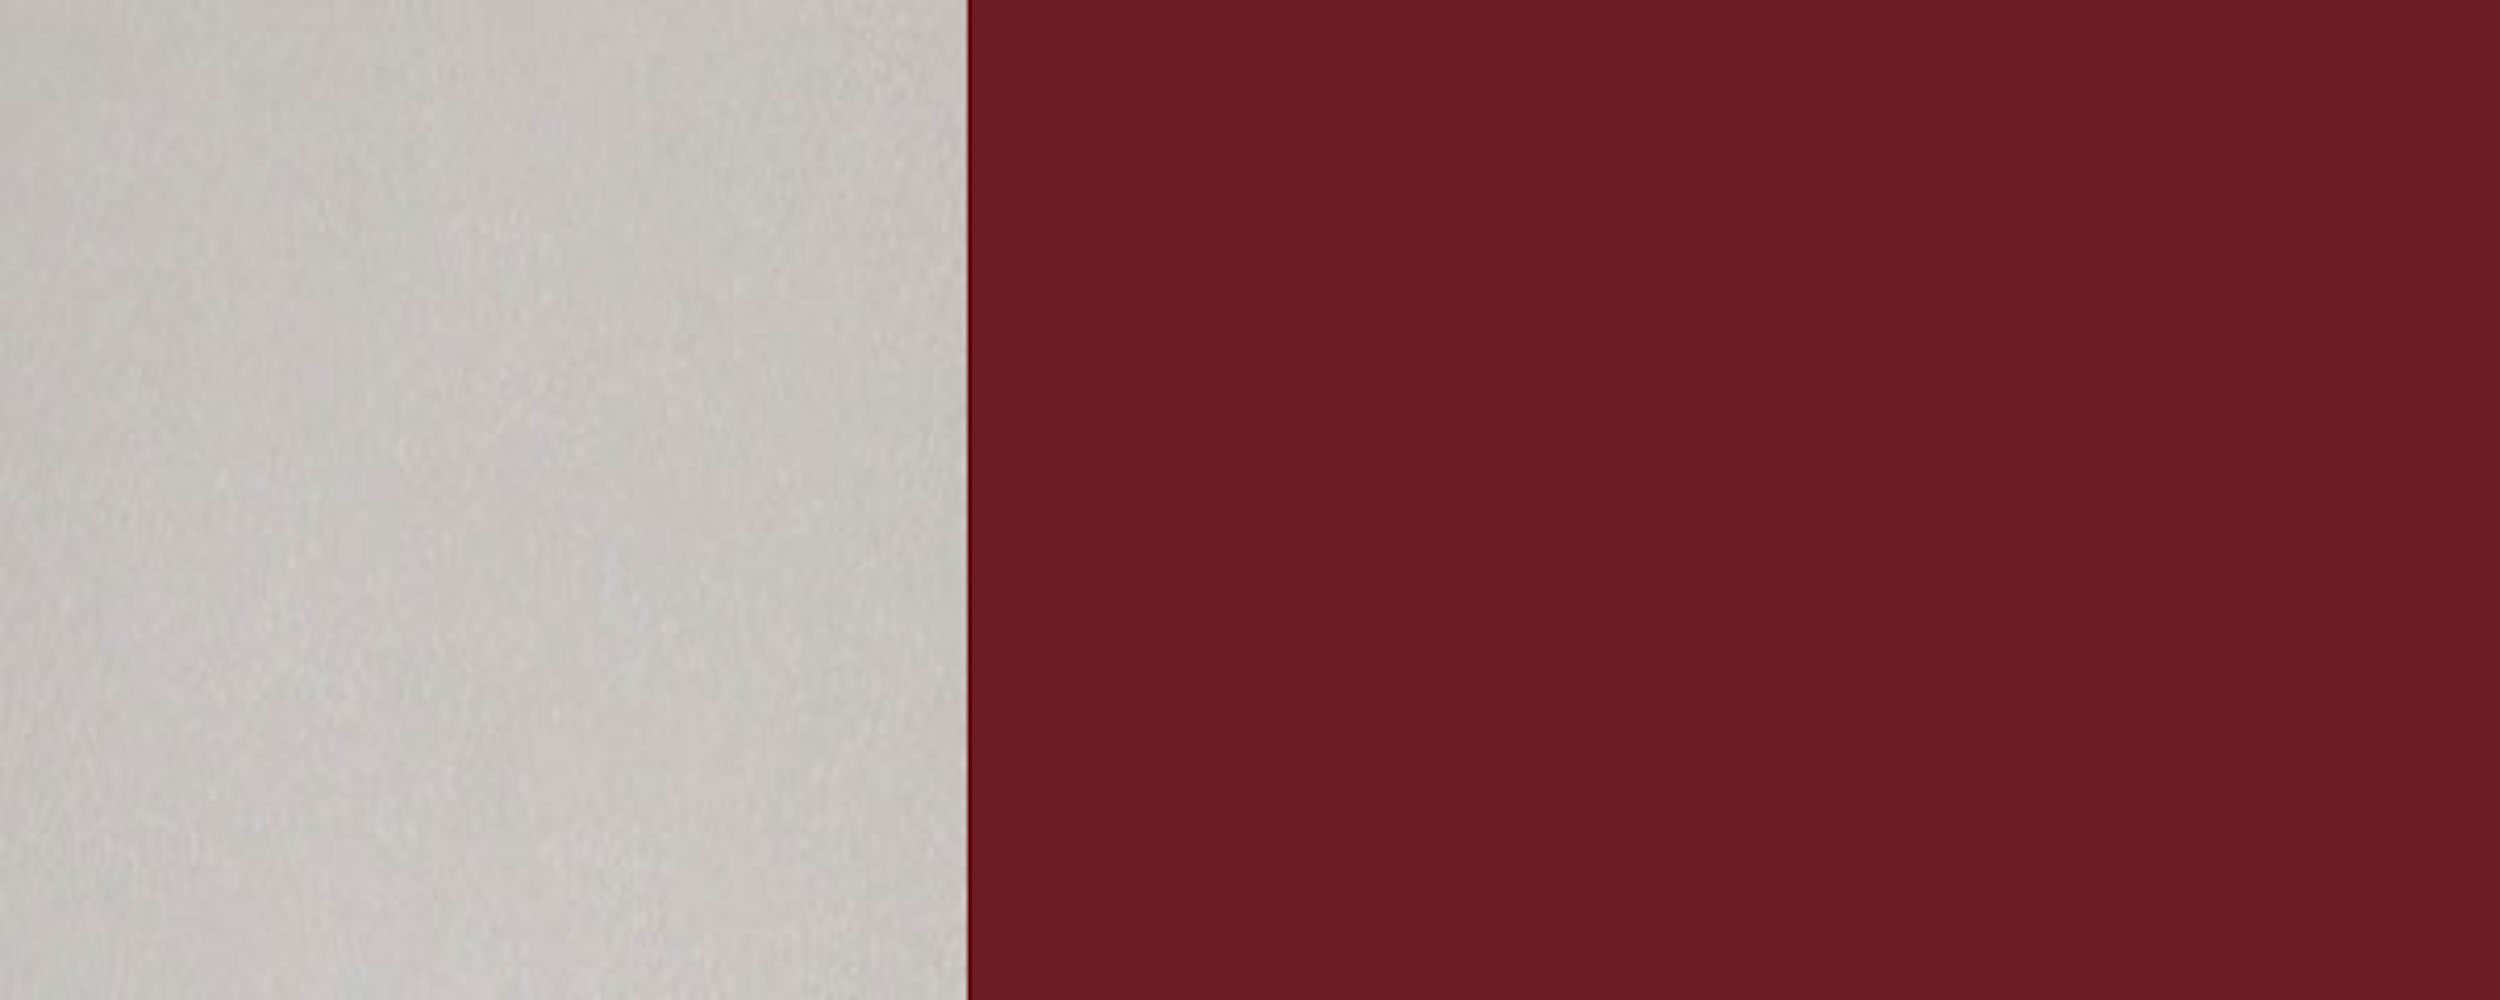 Feldmann-Wohnen Hochschrank purpurrot und 2-türig Front- (Rimini) RAL Korpusfarbe wählbar 60cm matt 3004 Rimini